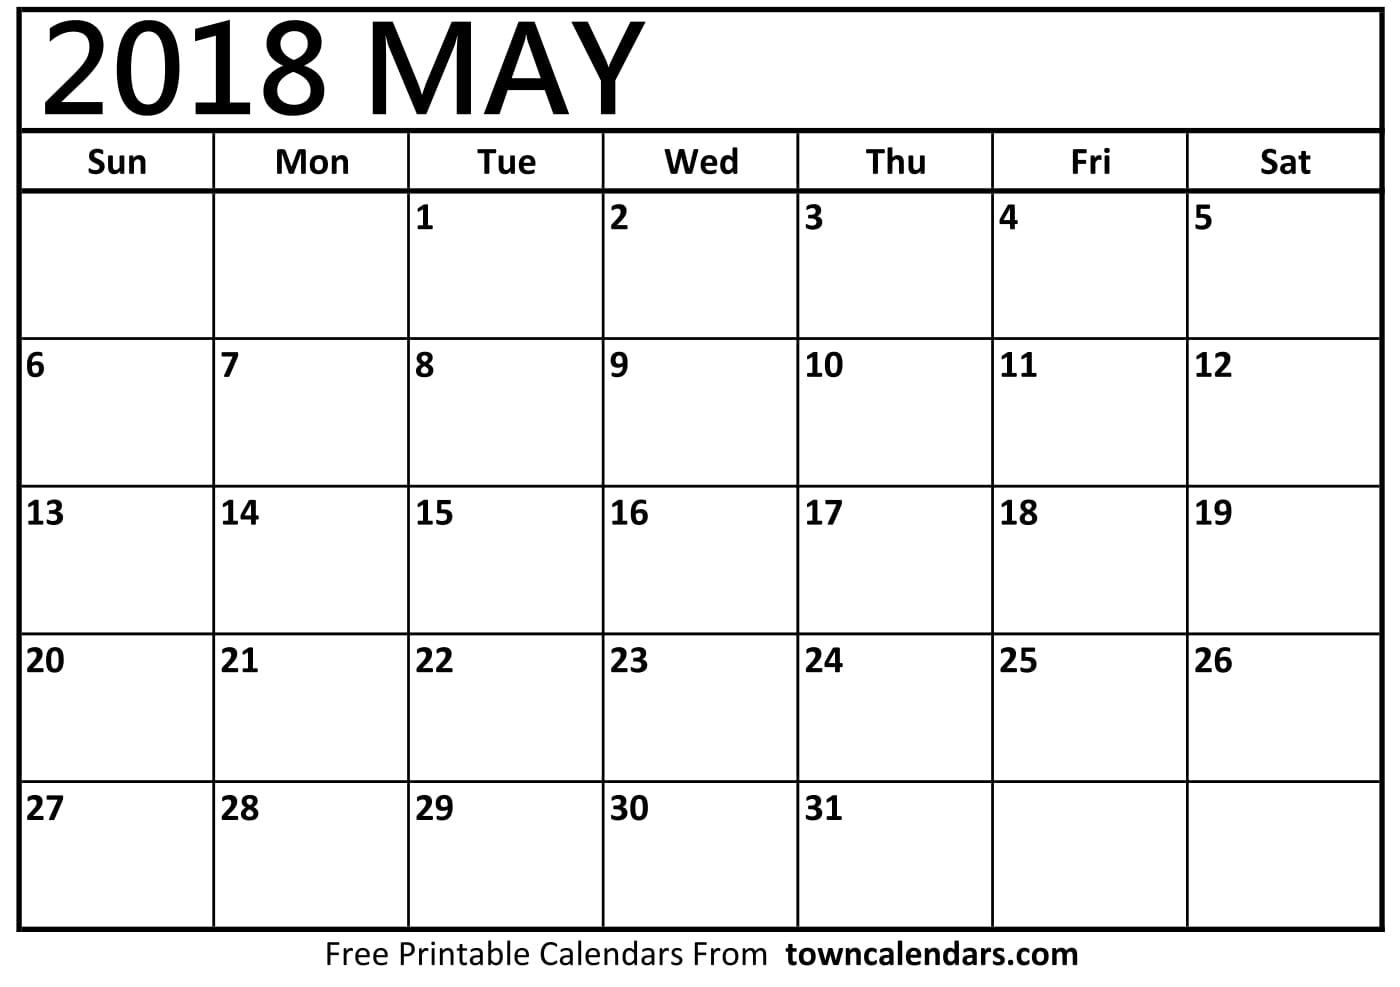 may-2018-calendar-free-printable-monthly-calendars